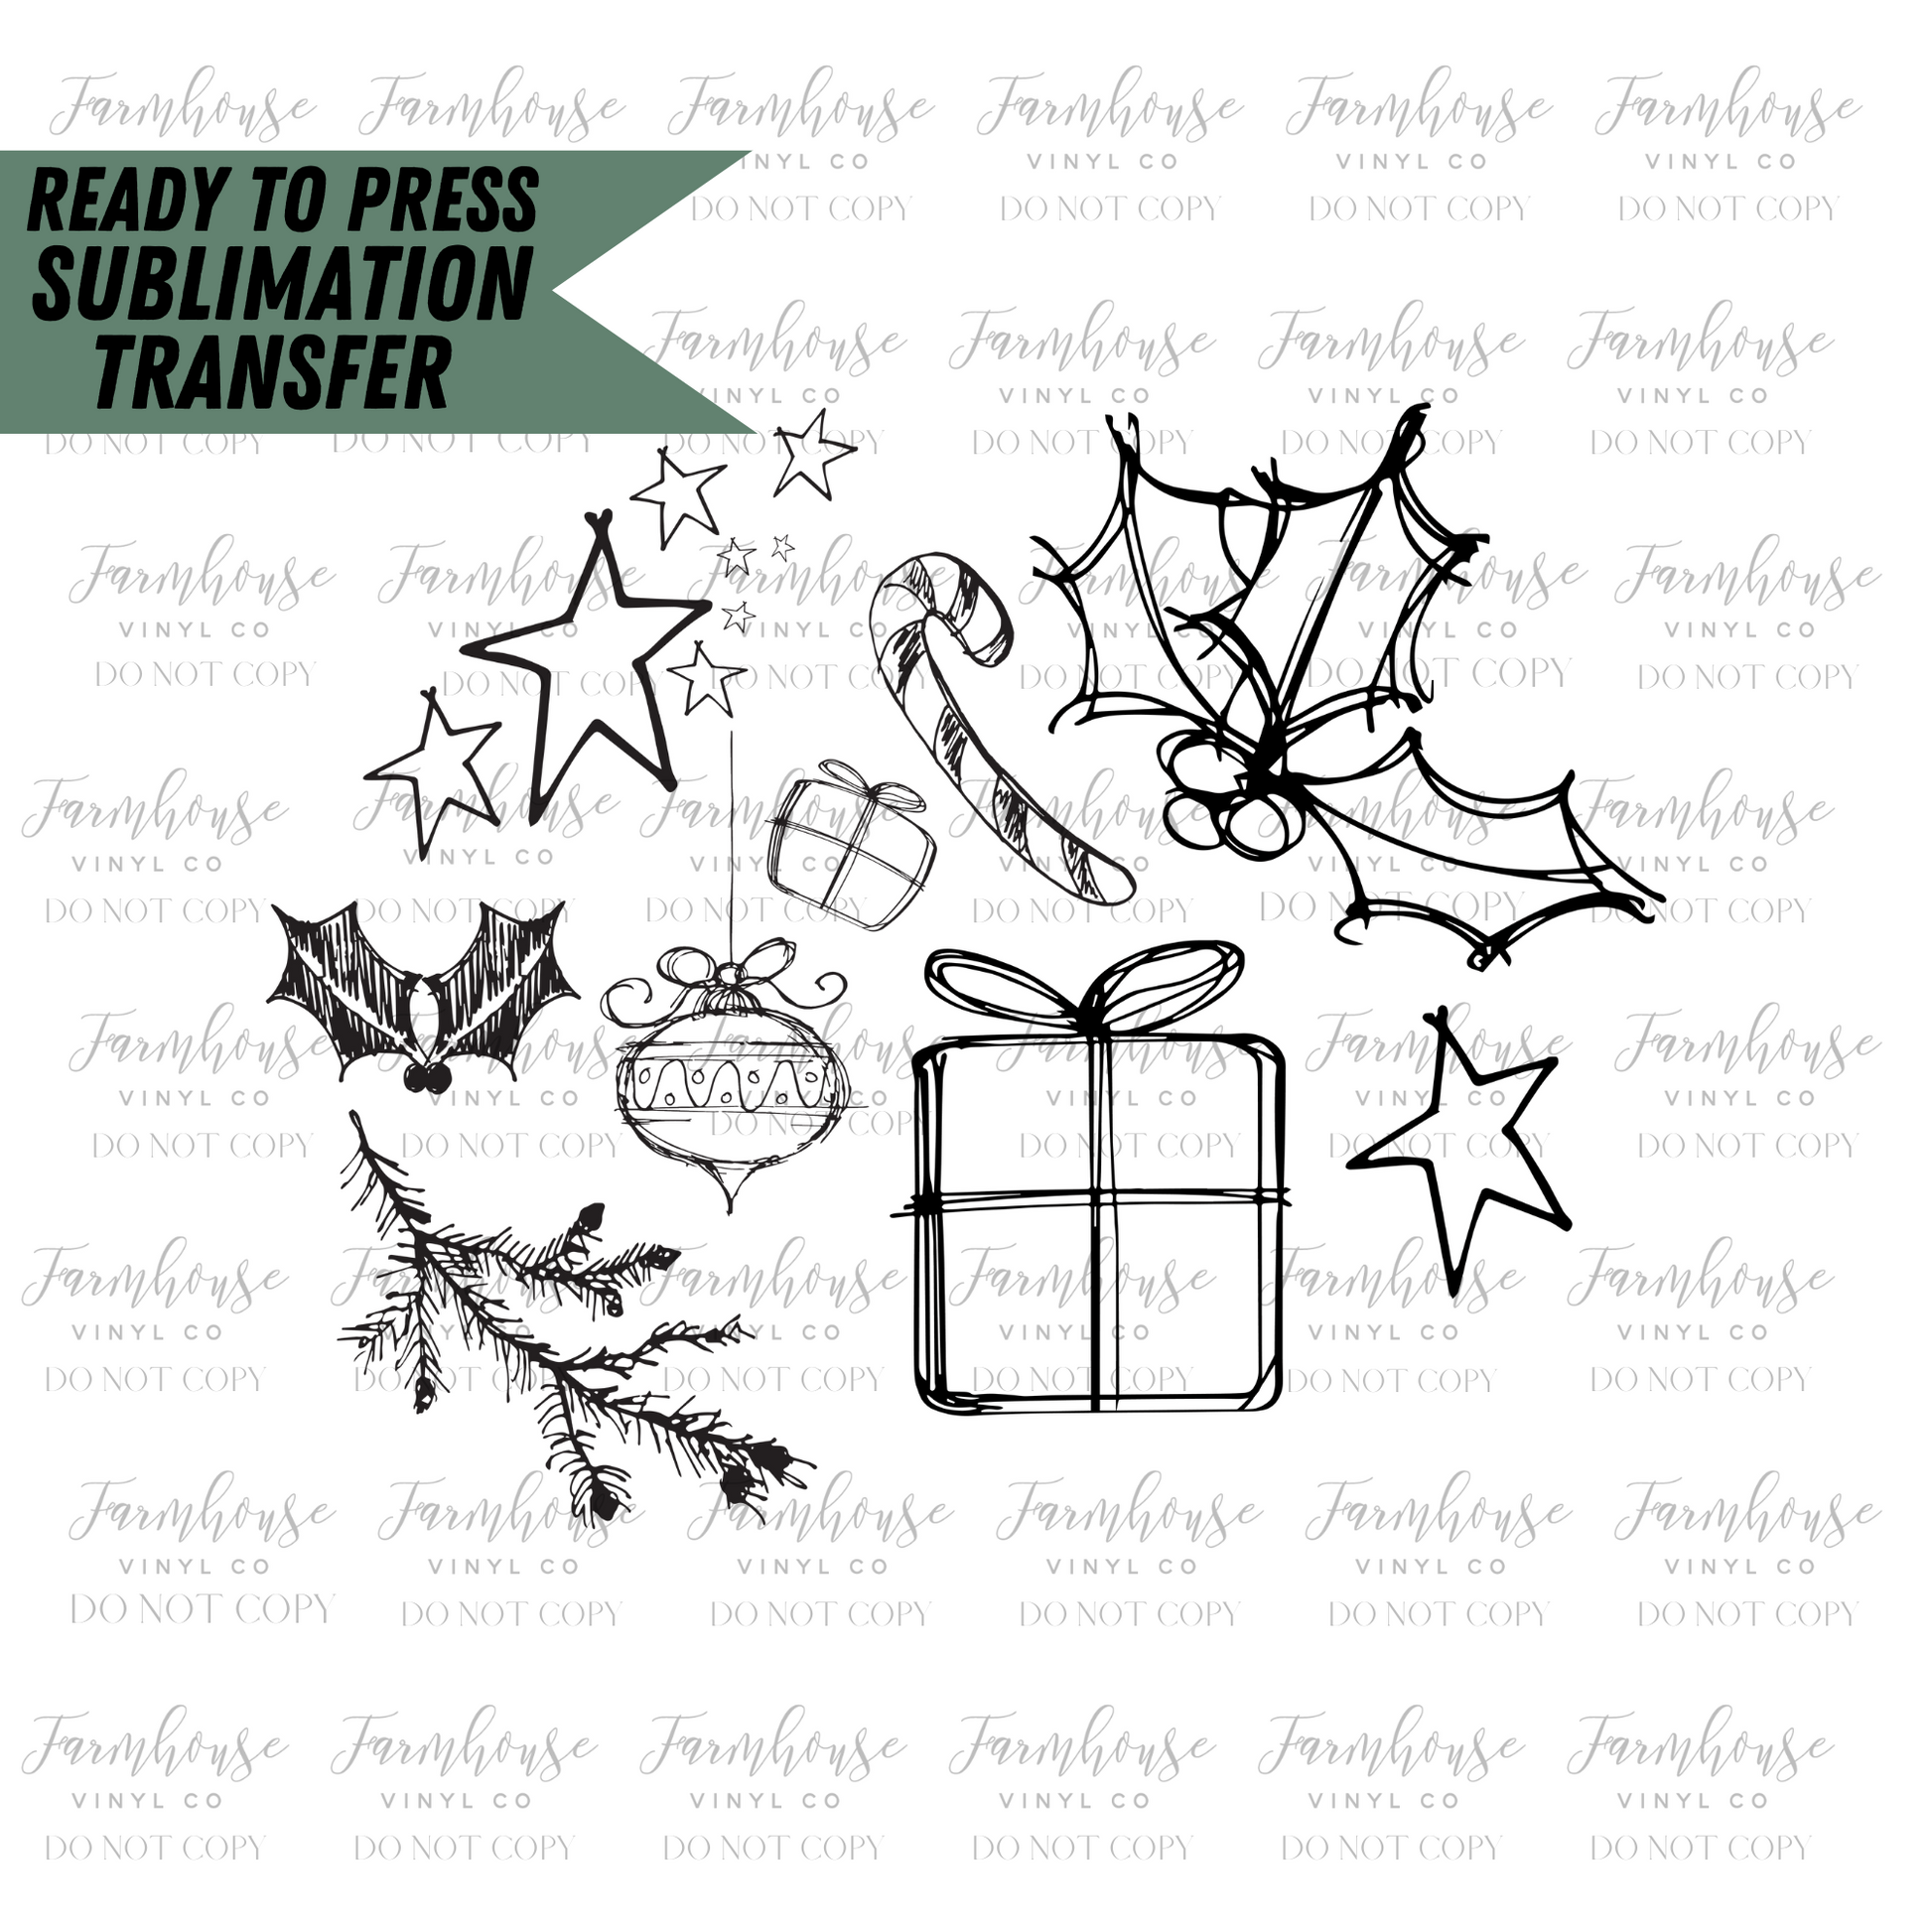 Sketch Christmas Favorite Things Ready To Press Sublimation Transfer - Farmhouse Vinyl Co